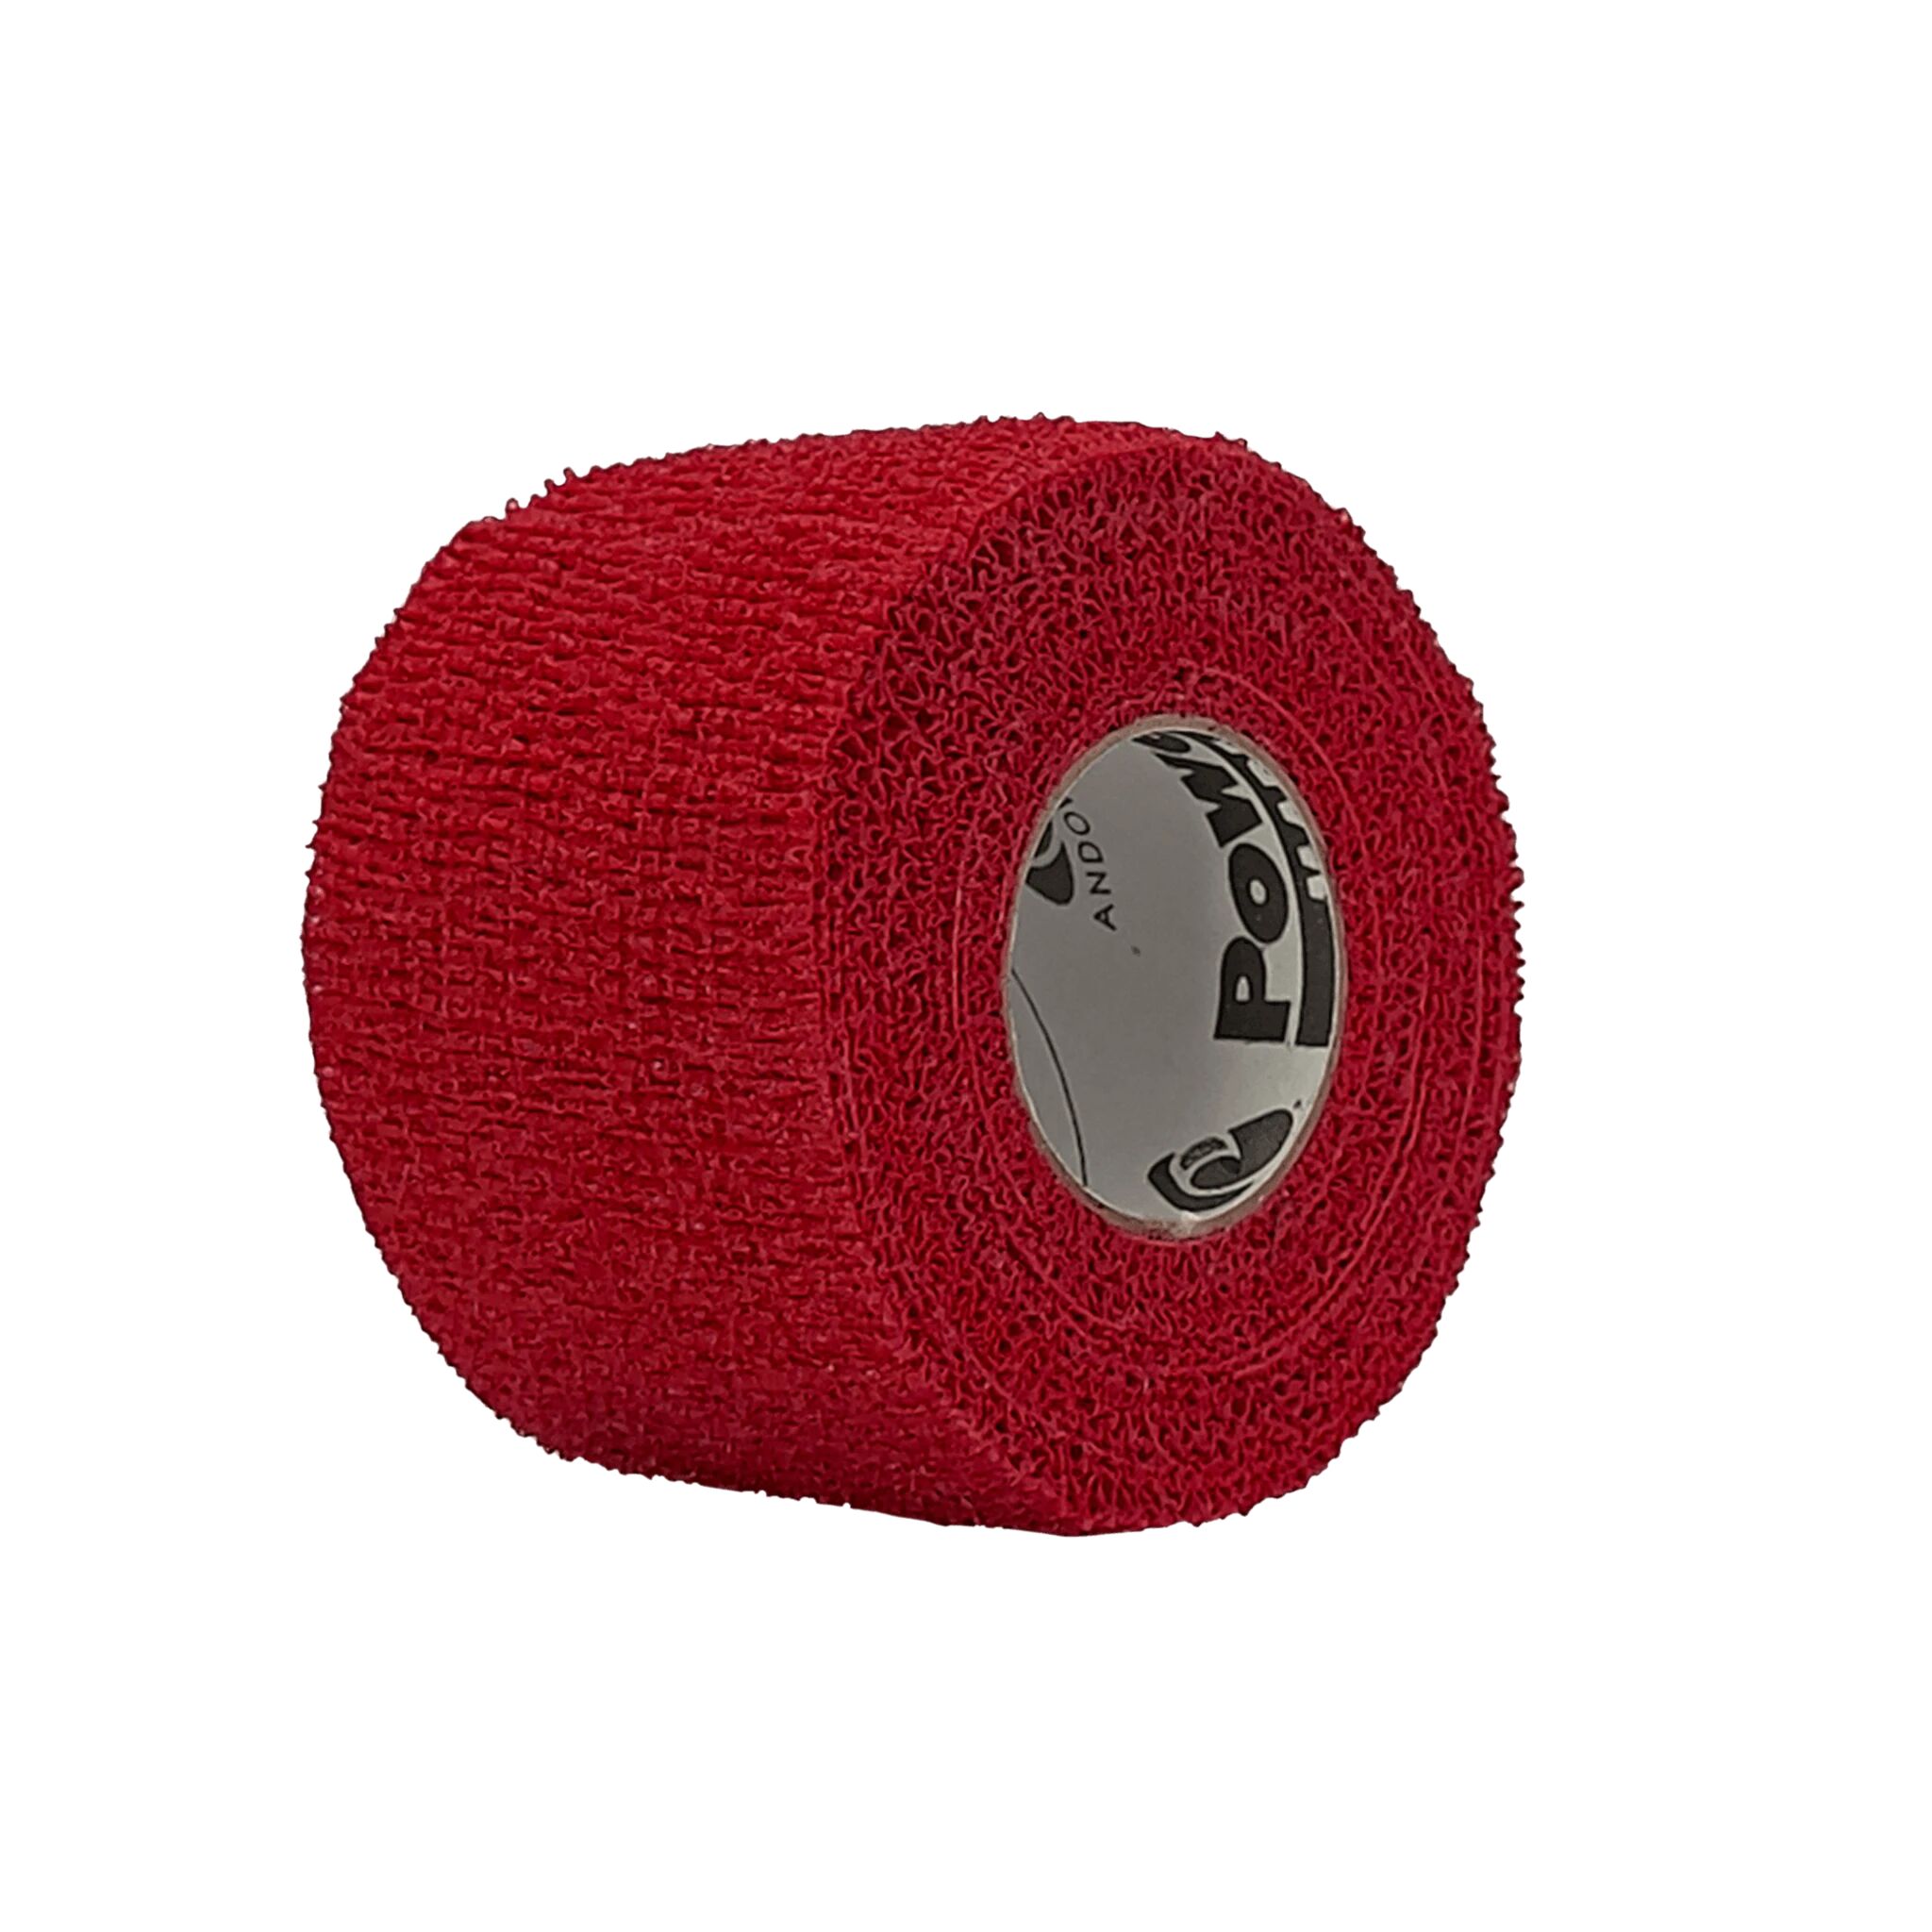 Powerflex grip tape 38mmx4,57 meter-48 pack Red-21/22, hockeytape 38mmx4,57 meter RED